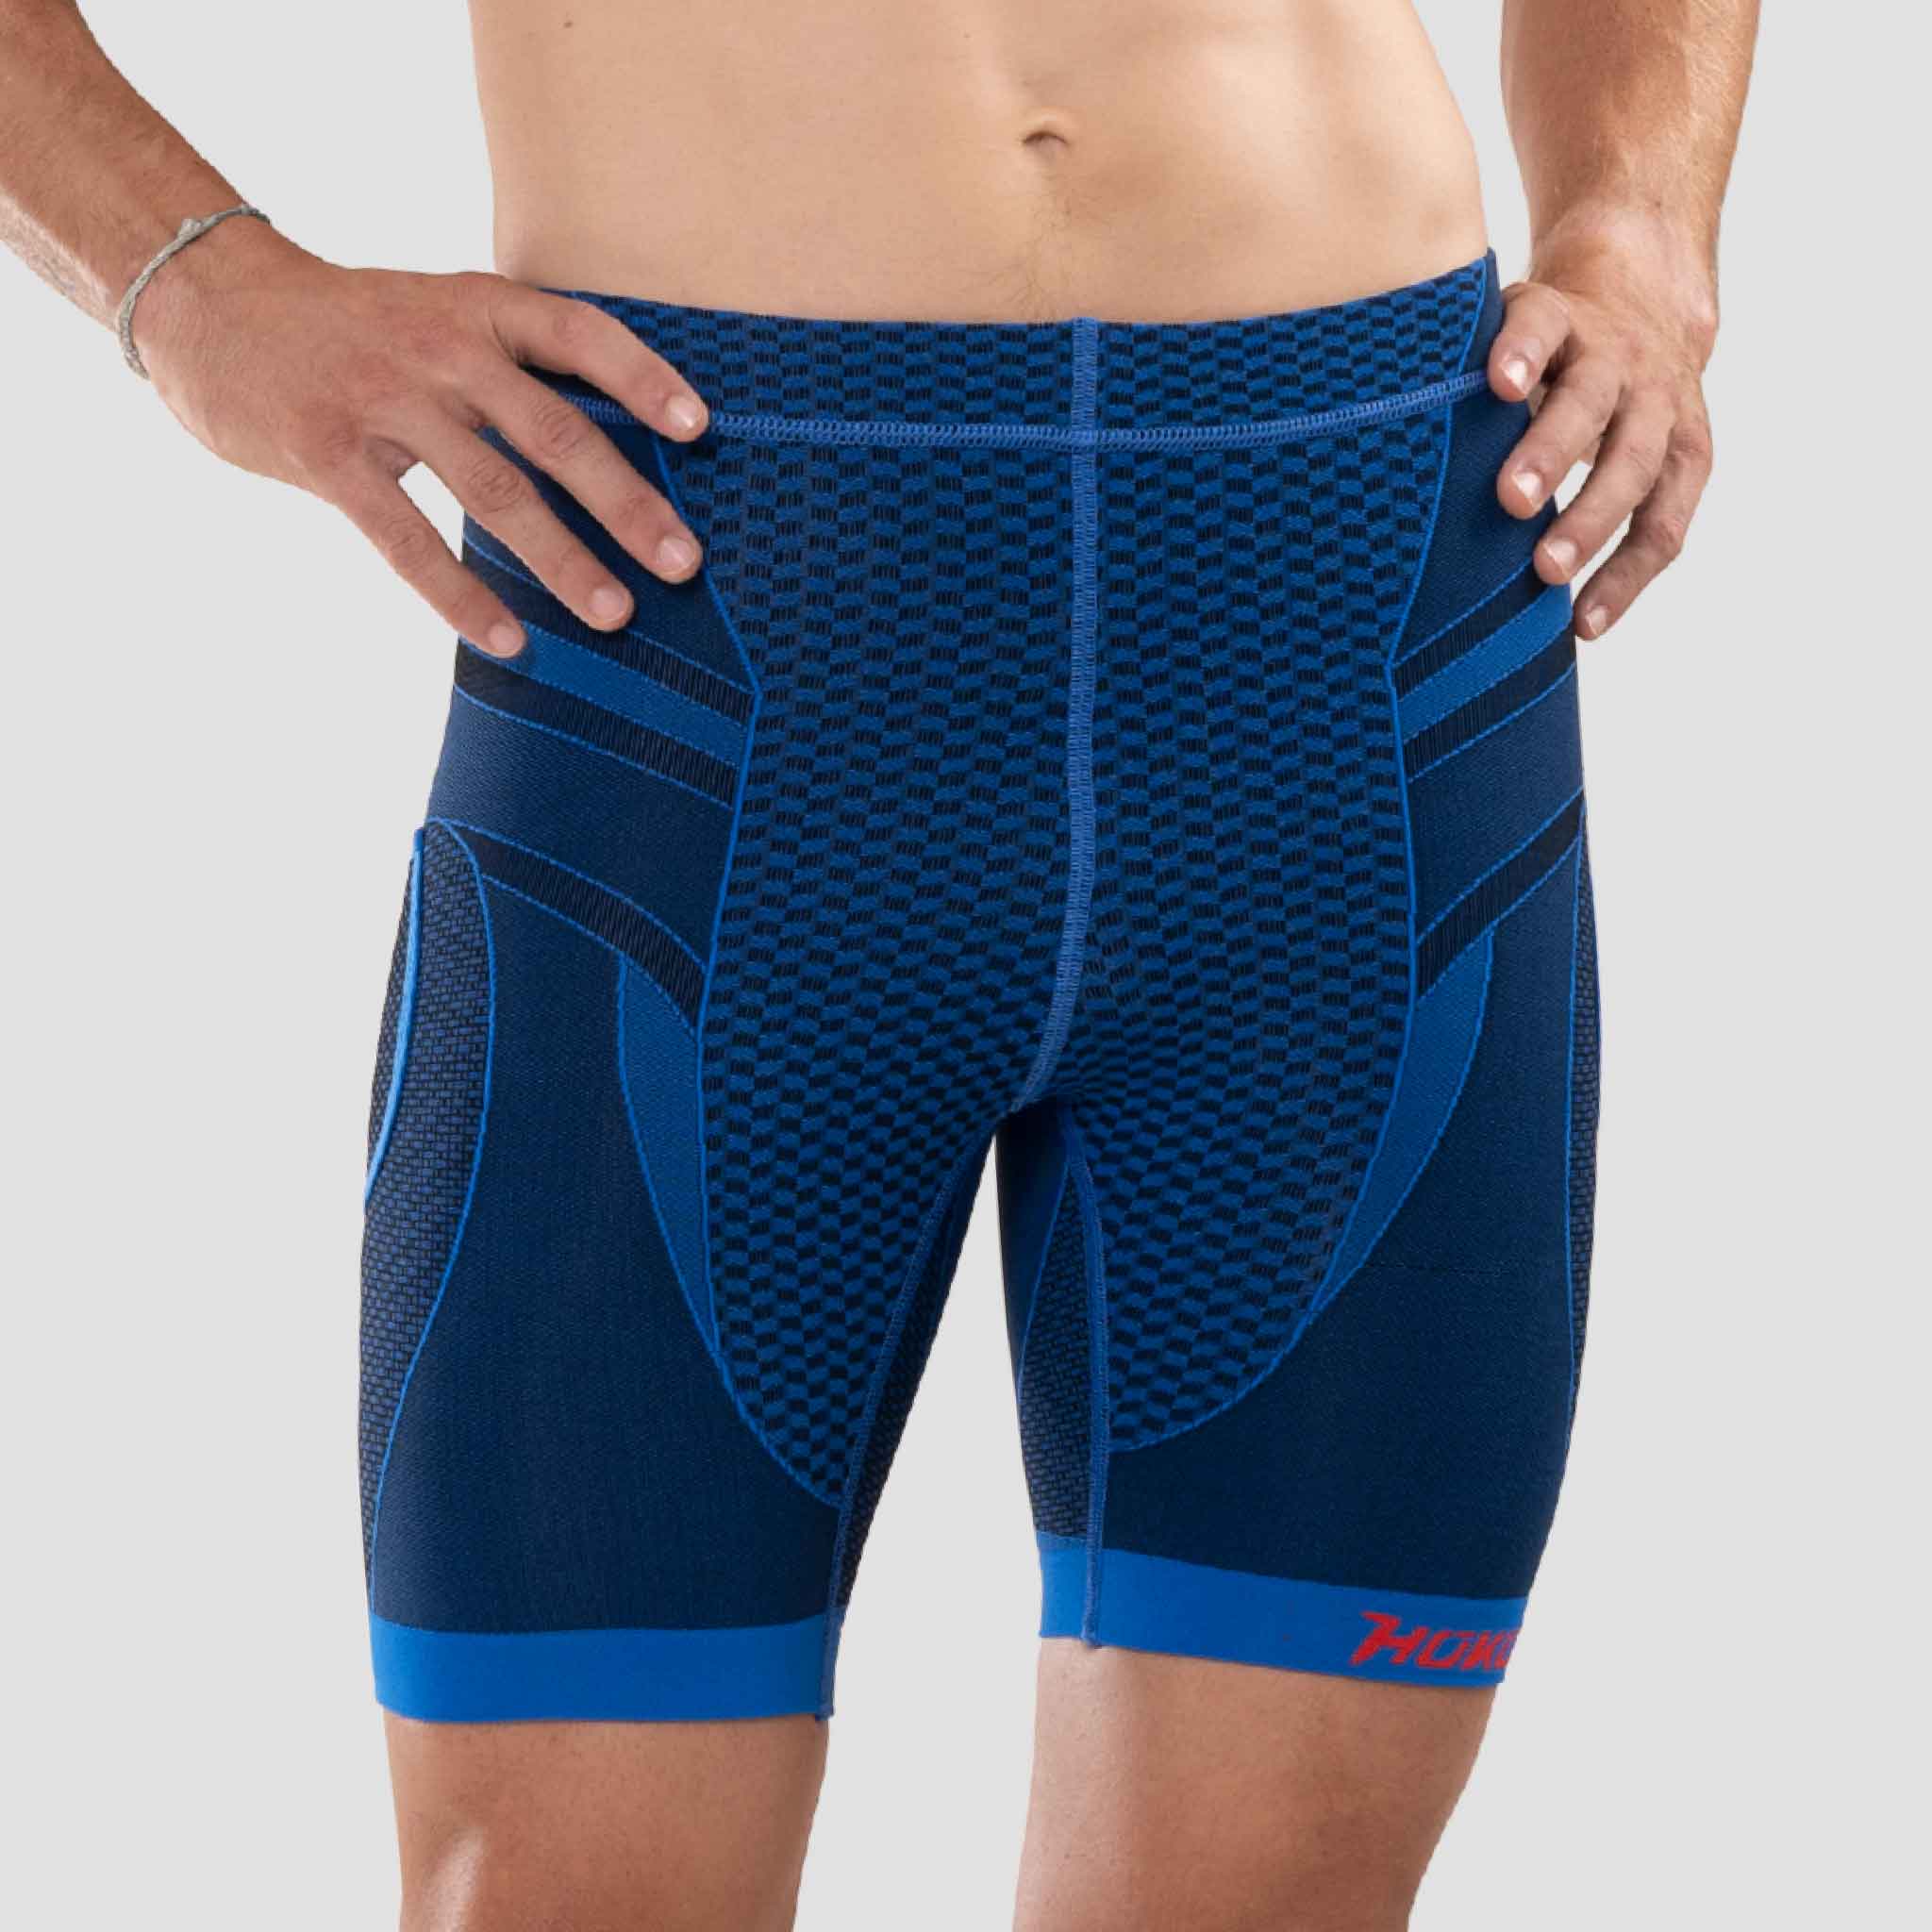 Shorts con Malla Compresión 2 en 1 Hombre Premium